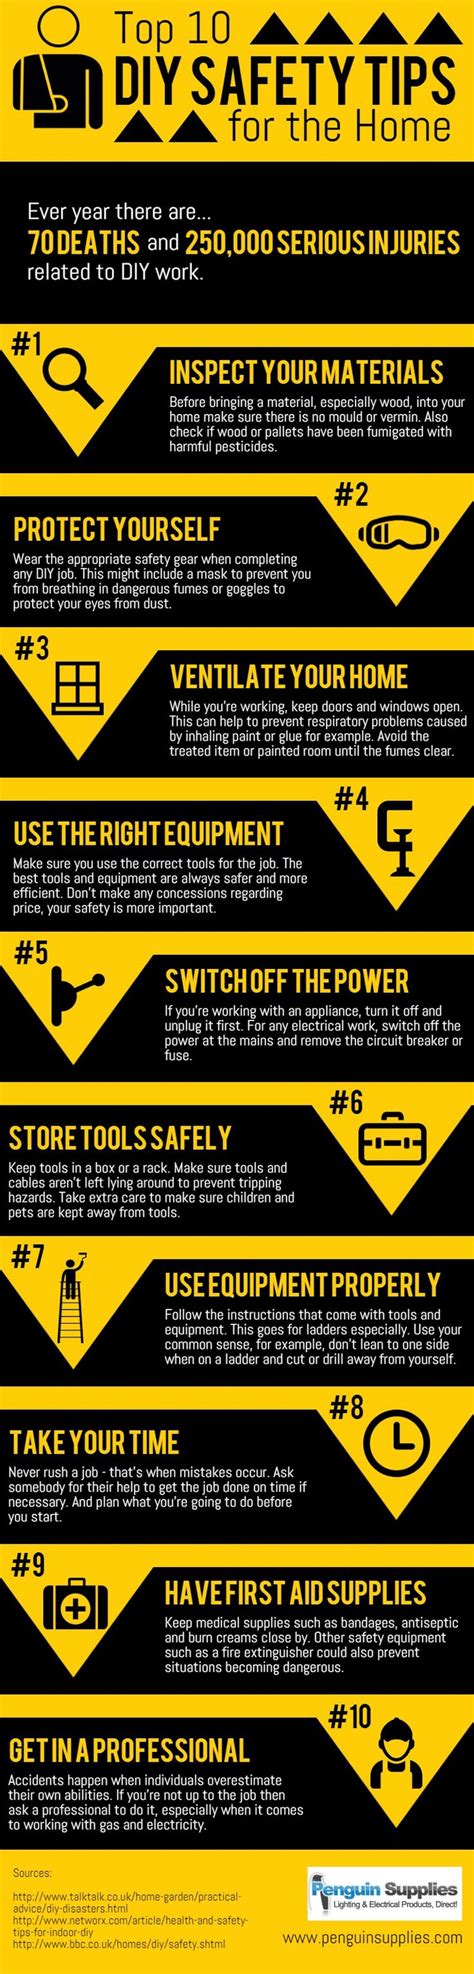 Top 10 DIY Safety Tips | Visual.ly